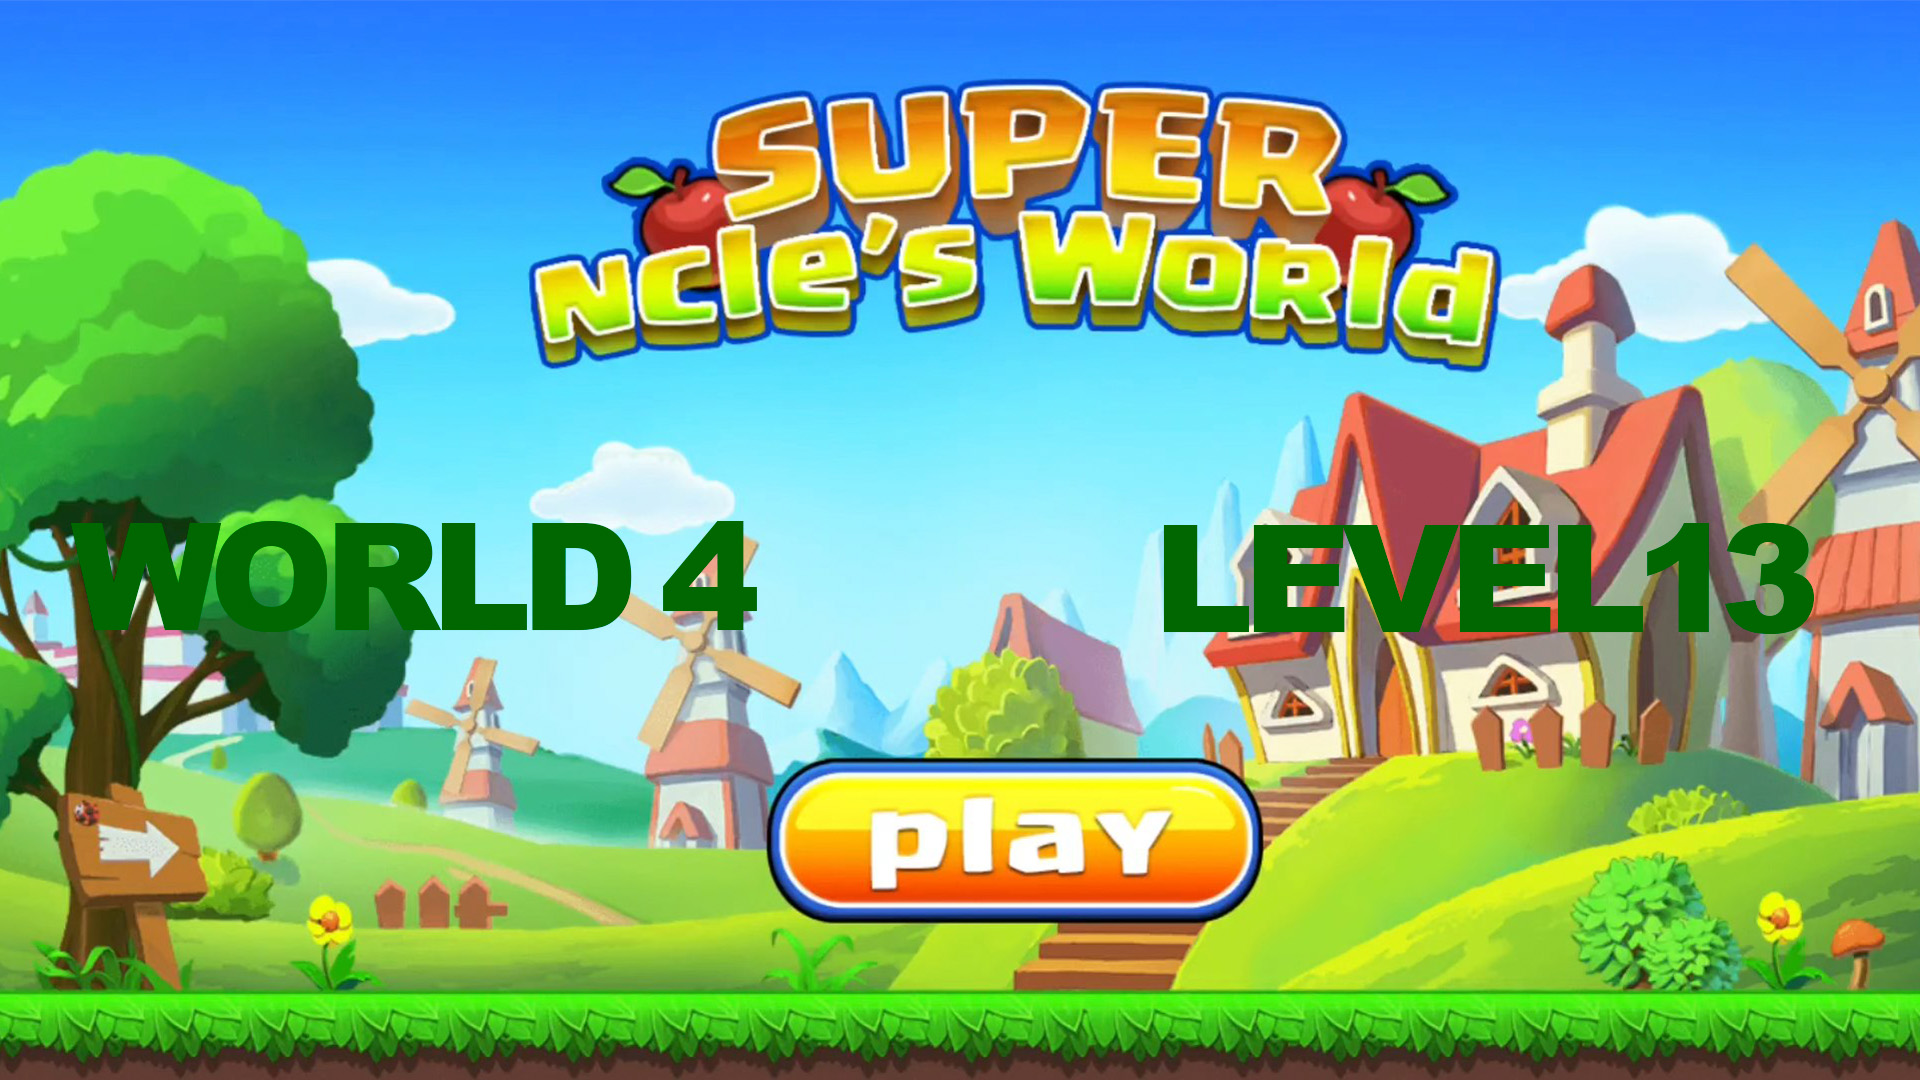 Super ncle's  World 4. Level 13.